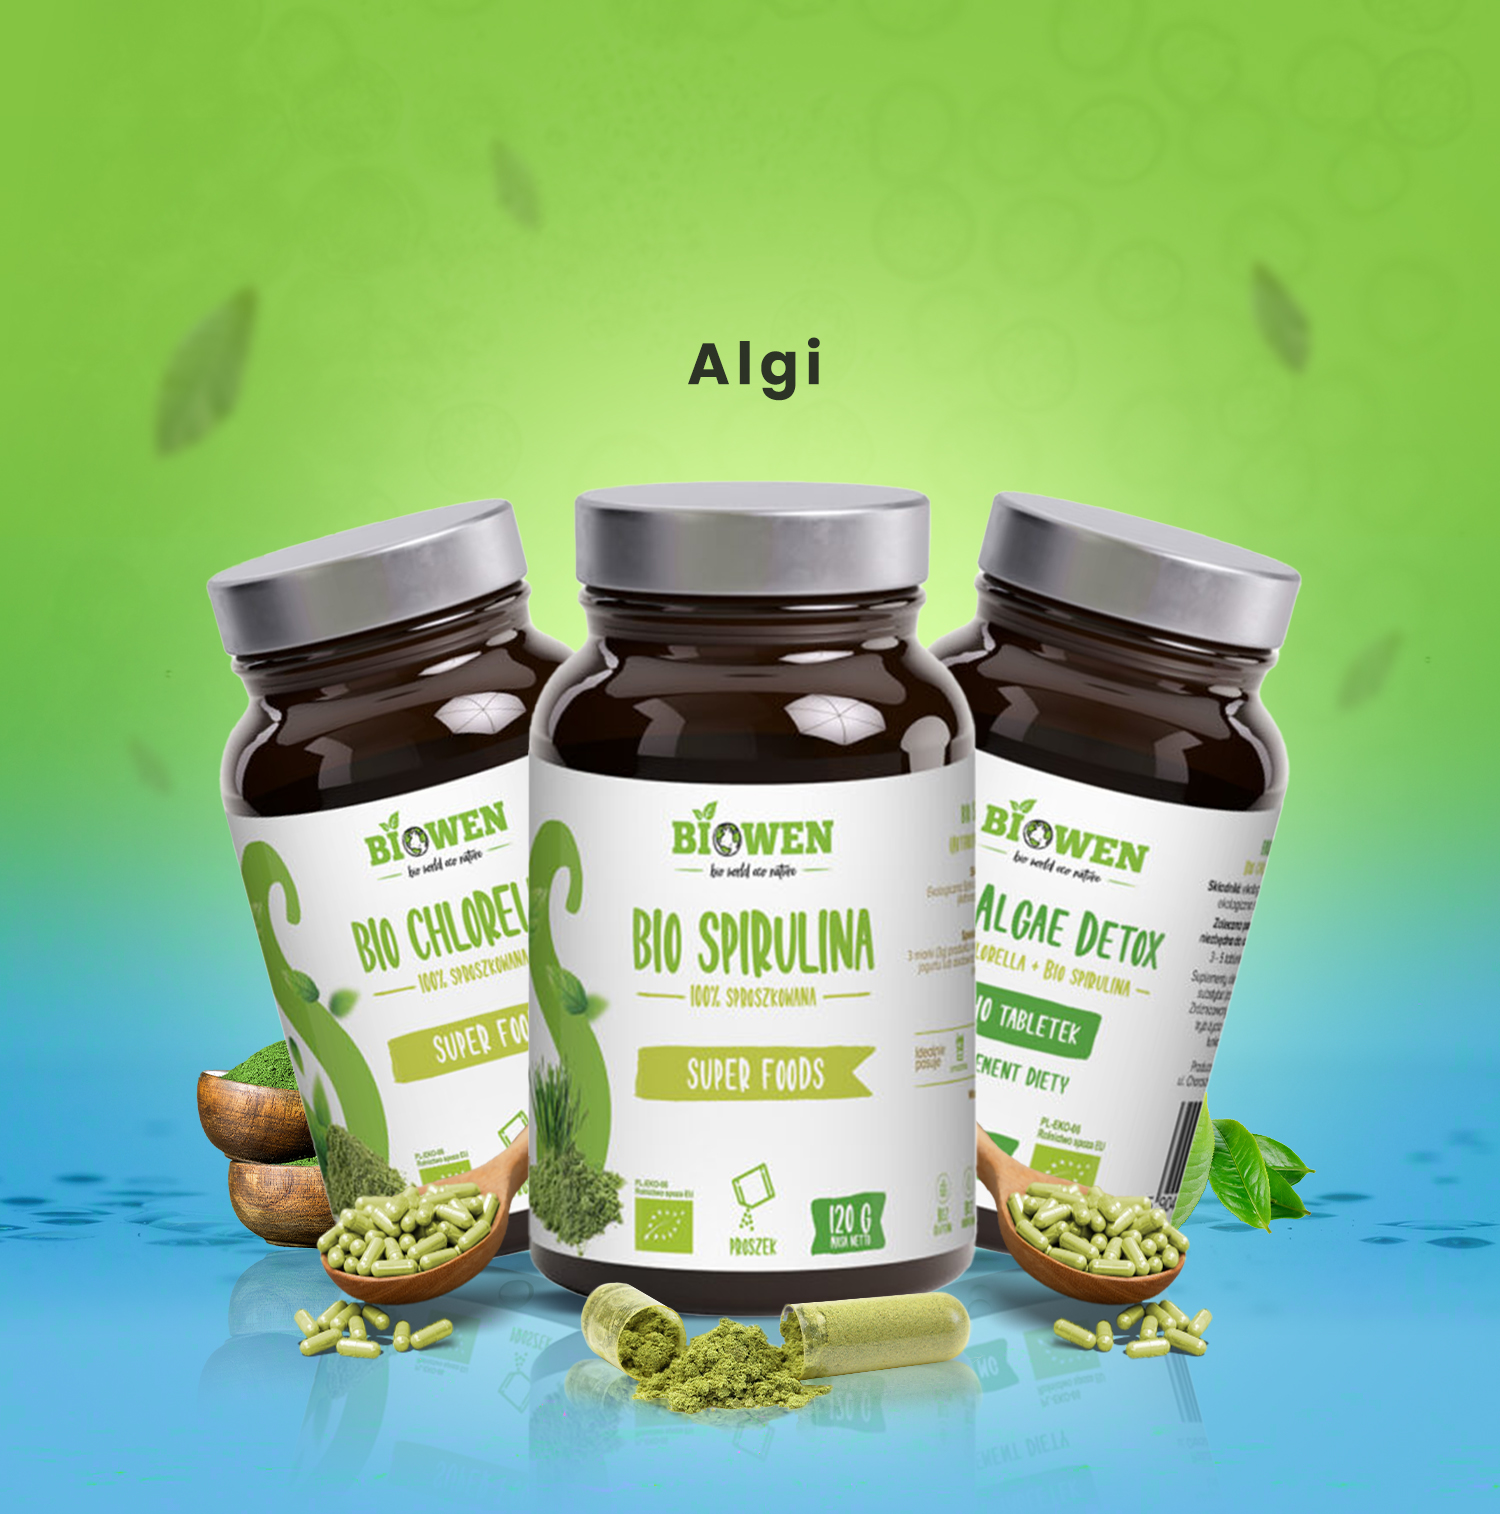 algi biowen